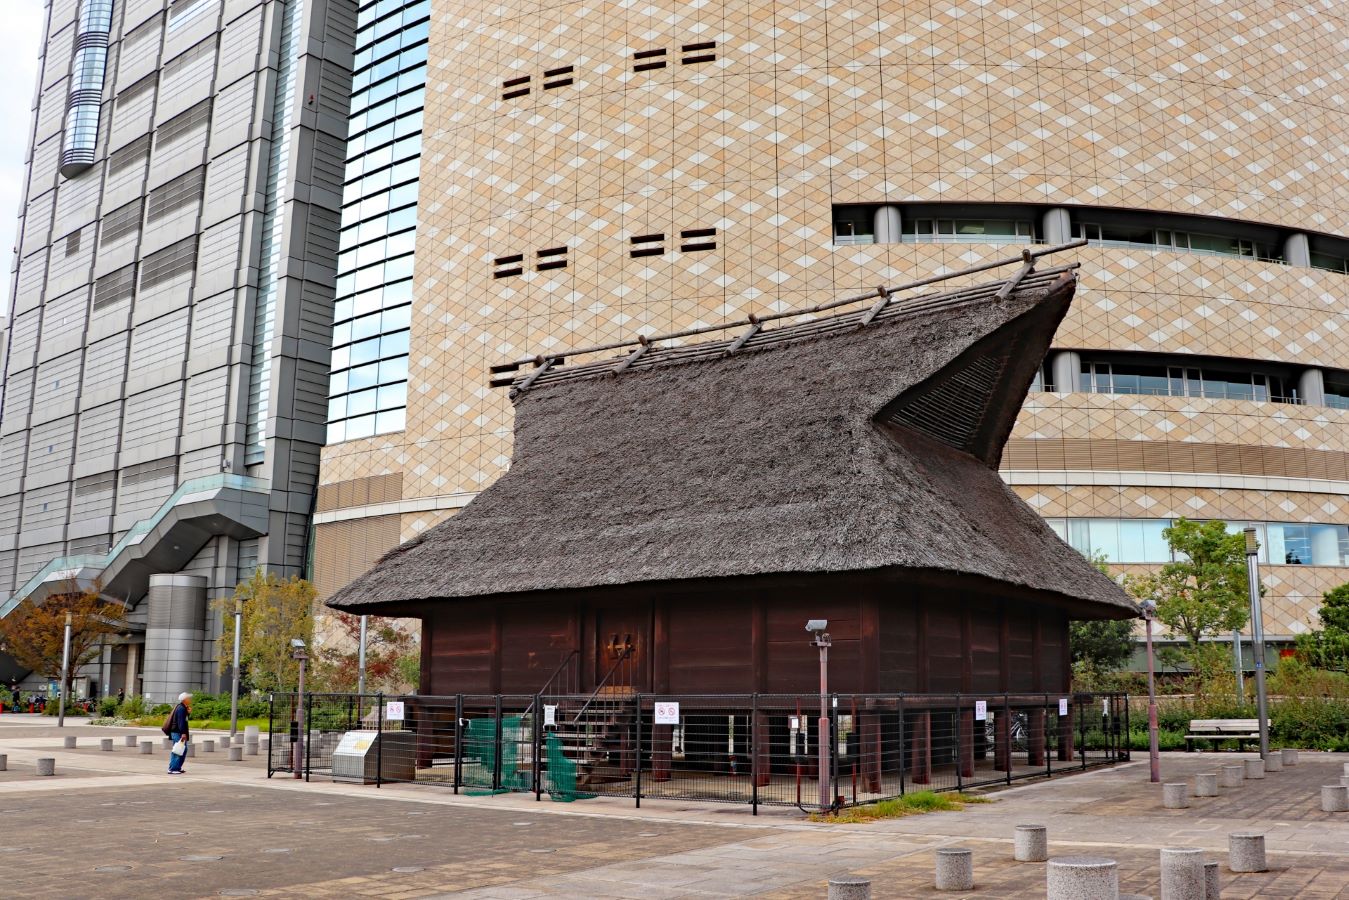 A display outside the Osaka History Museum